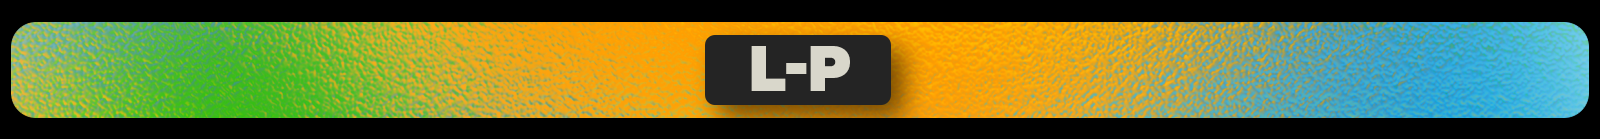 L-P.png